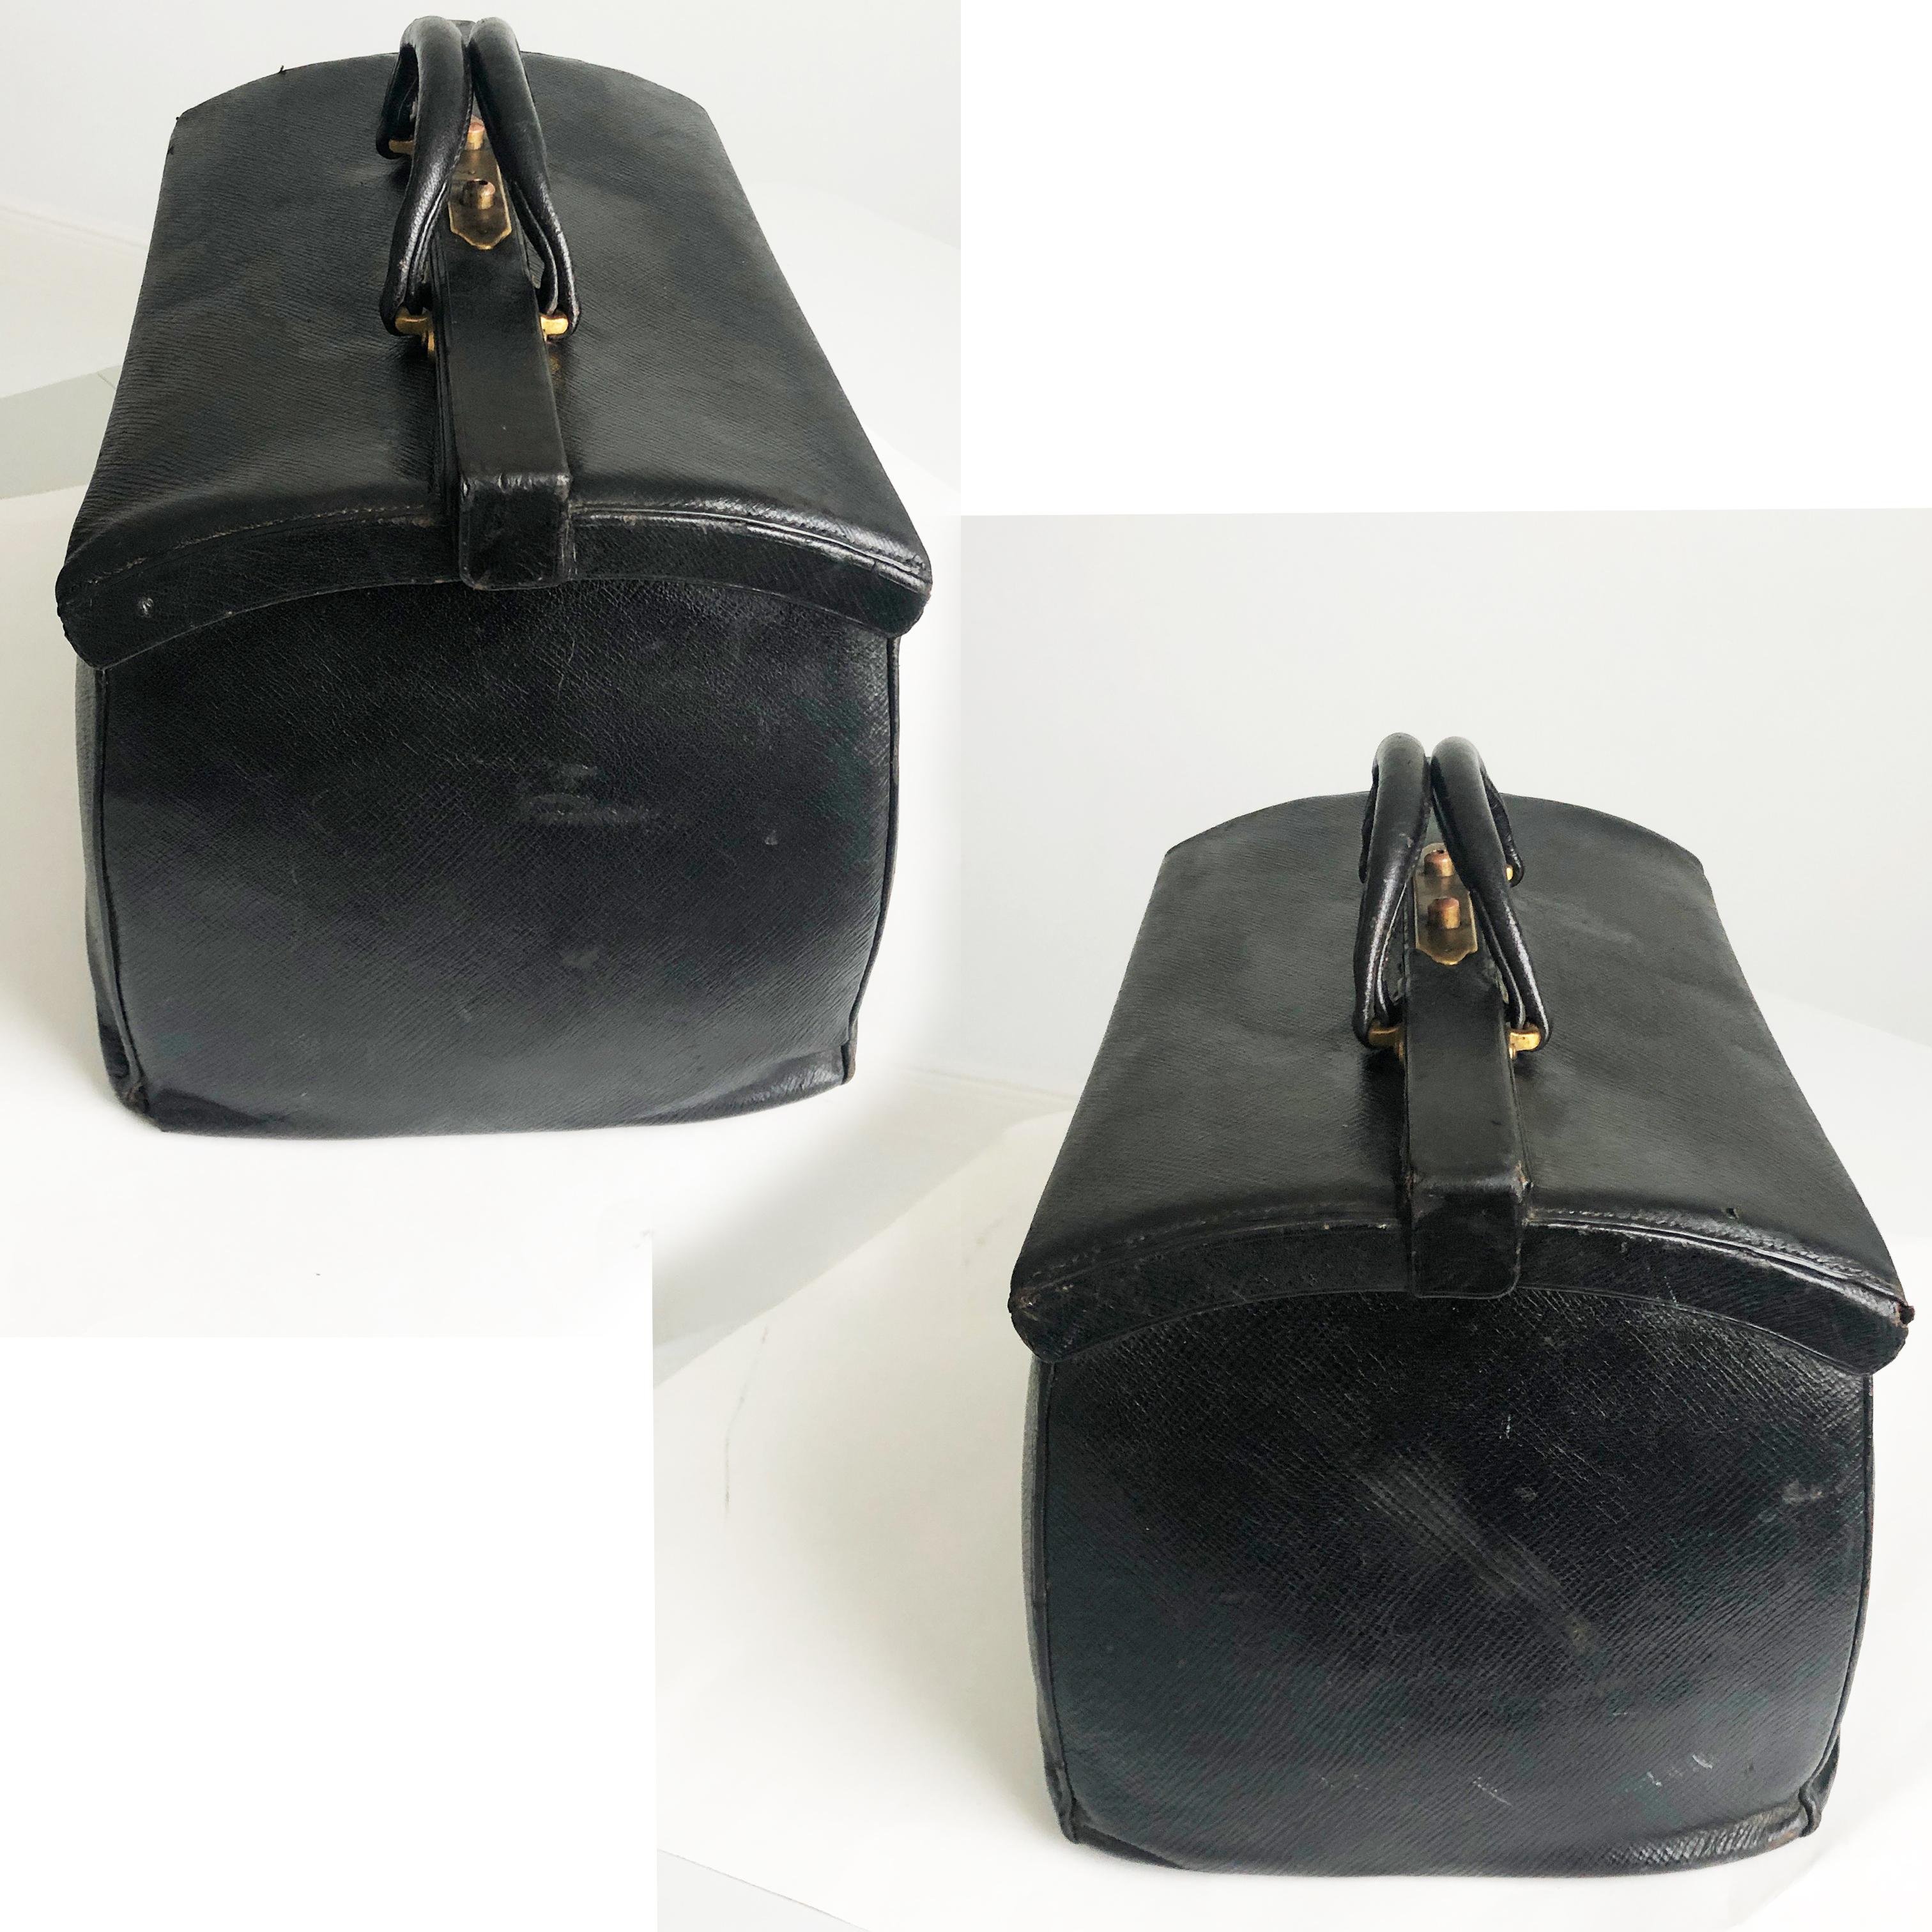 Louis Vuitton Doctors Bag Sac Cabine Rare Antique Travel Case Black Early 20th C In Fair Condition For Sale In Port Saint Lucie, FL